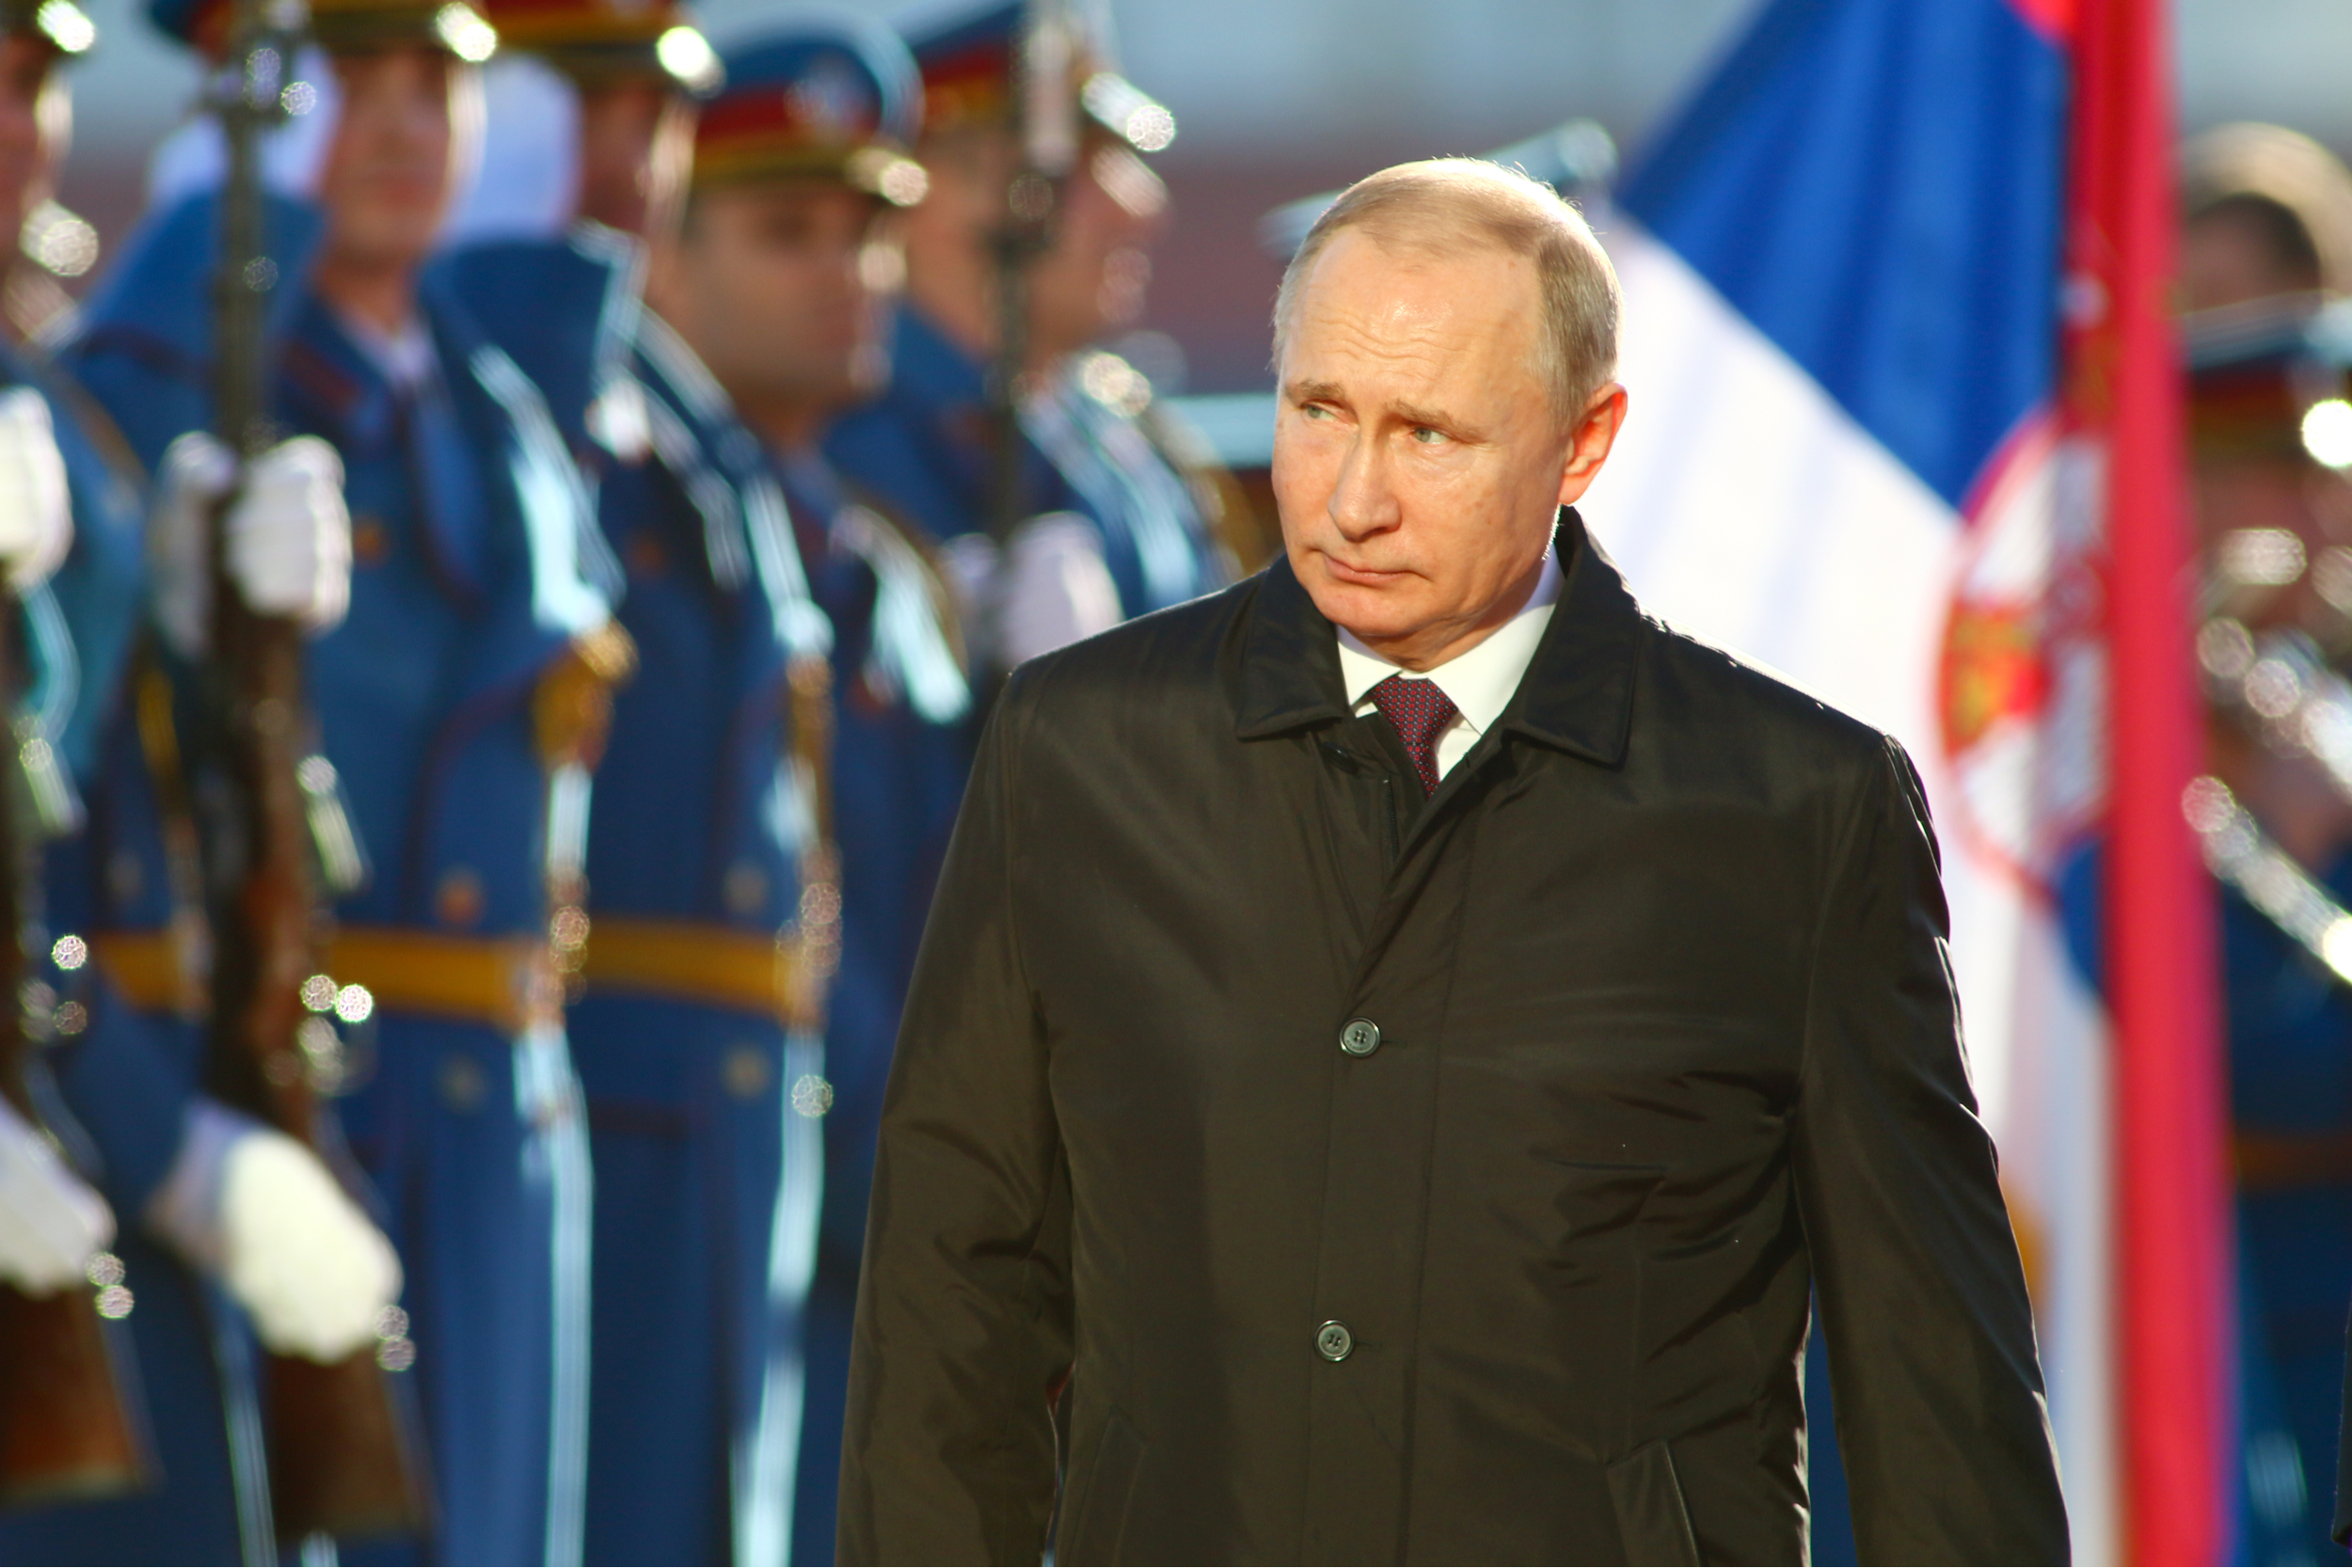 Władimir Putin. Fot. Sasa Dzambic Photography / Shutterstock.com